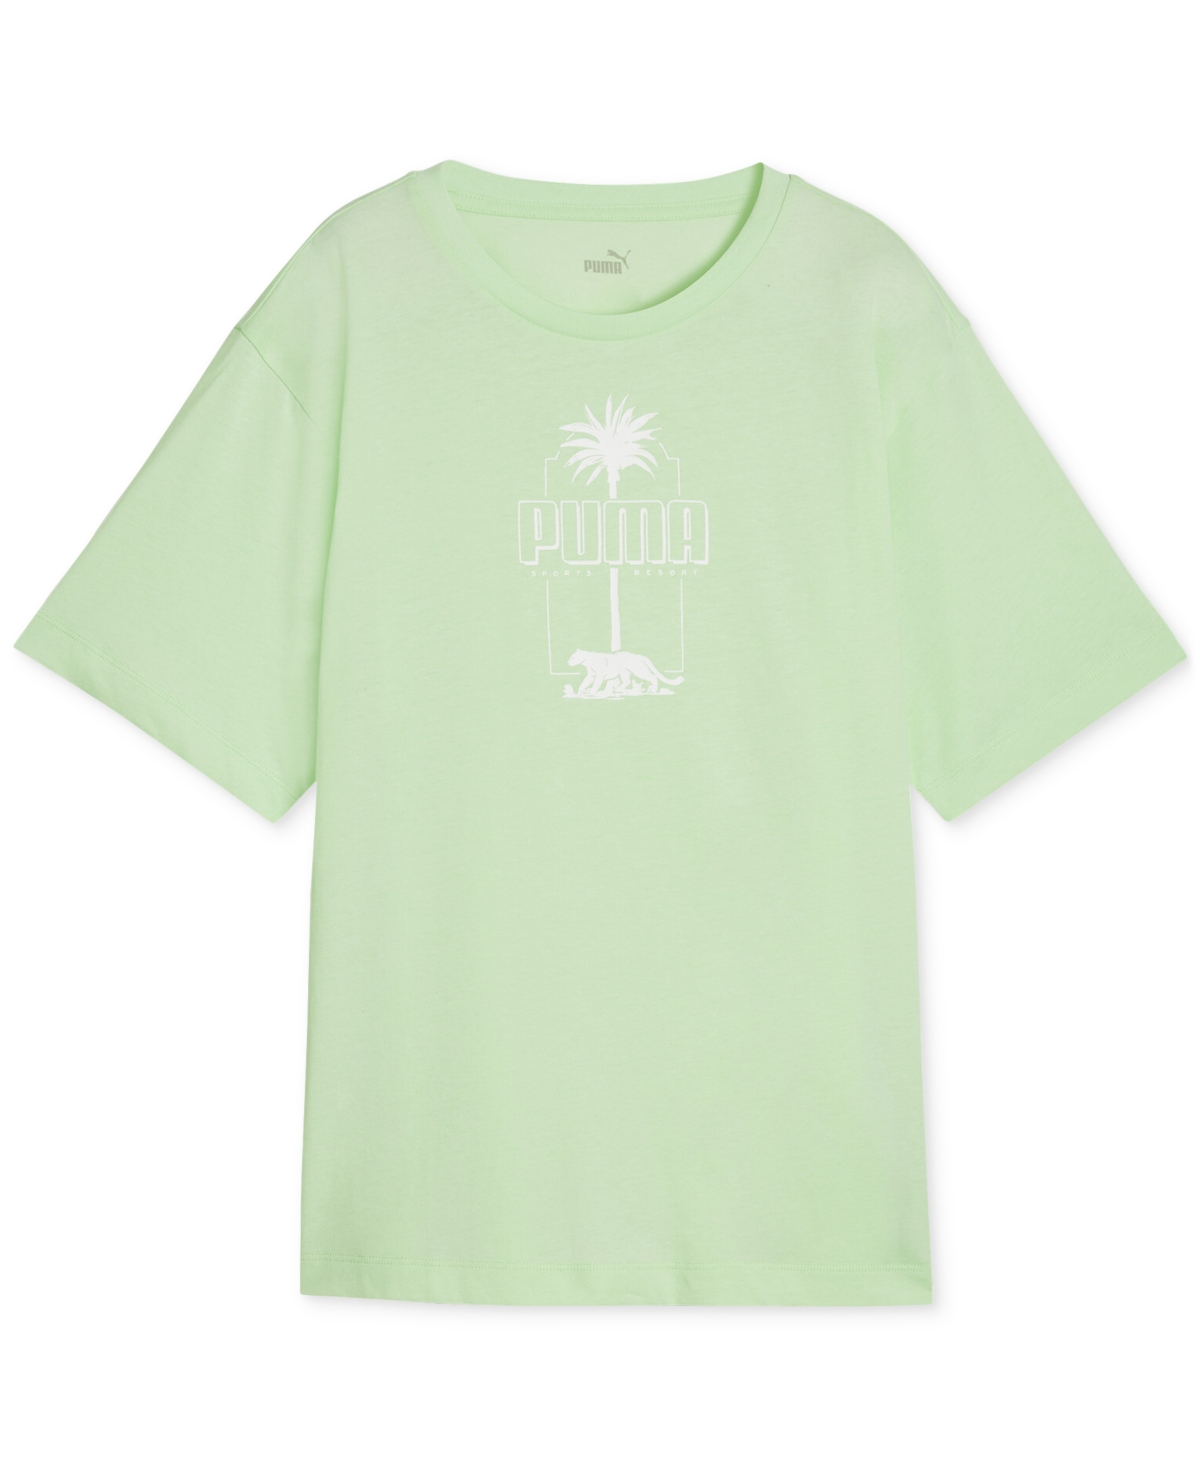 Women's Essentials Palm Resort Graphic T-Shirt - Fresh Mint